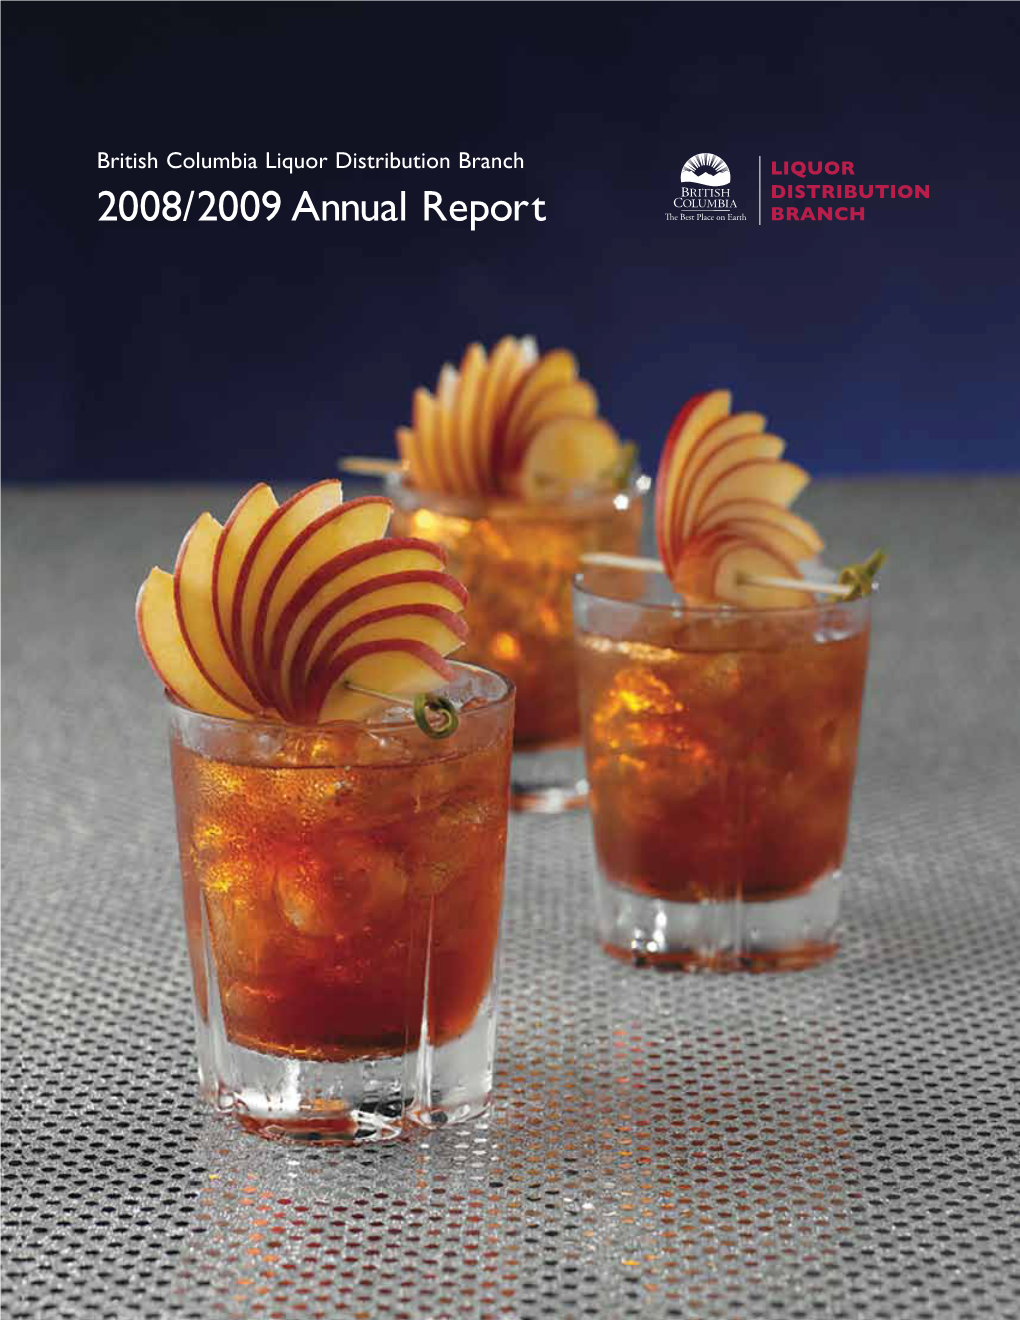 2008/2009 Annual Report